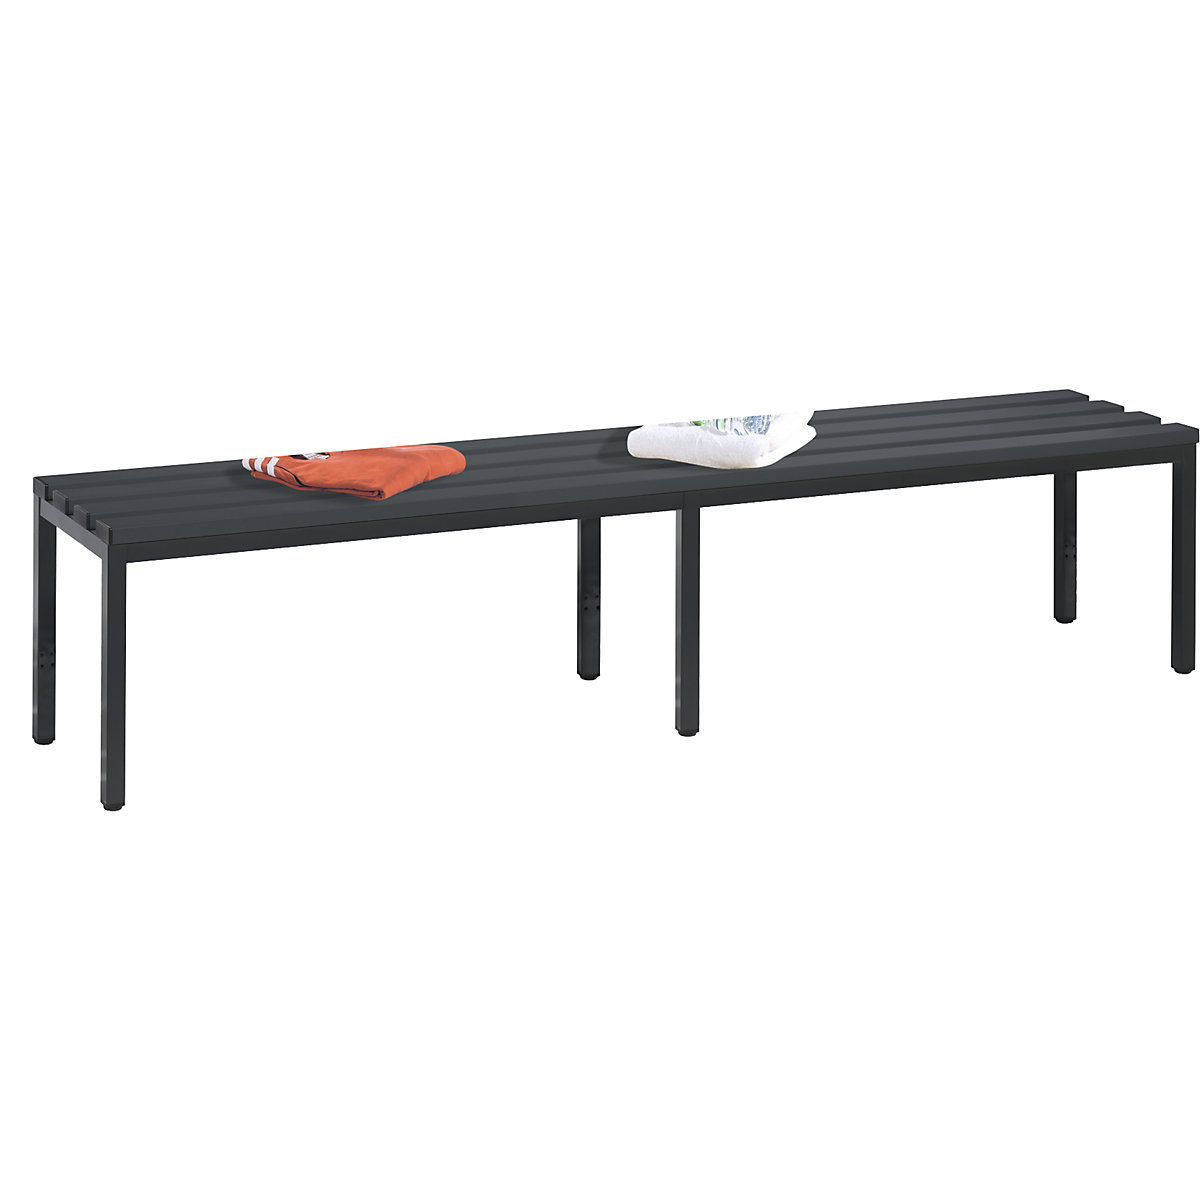 BASIC cloakroom bench – C+P, plastic, length 1960 mm, black grey-8